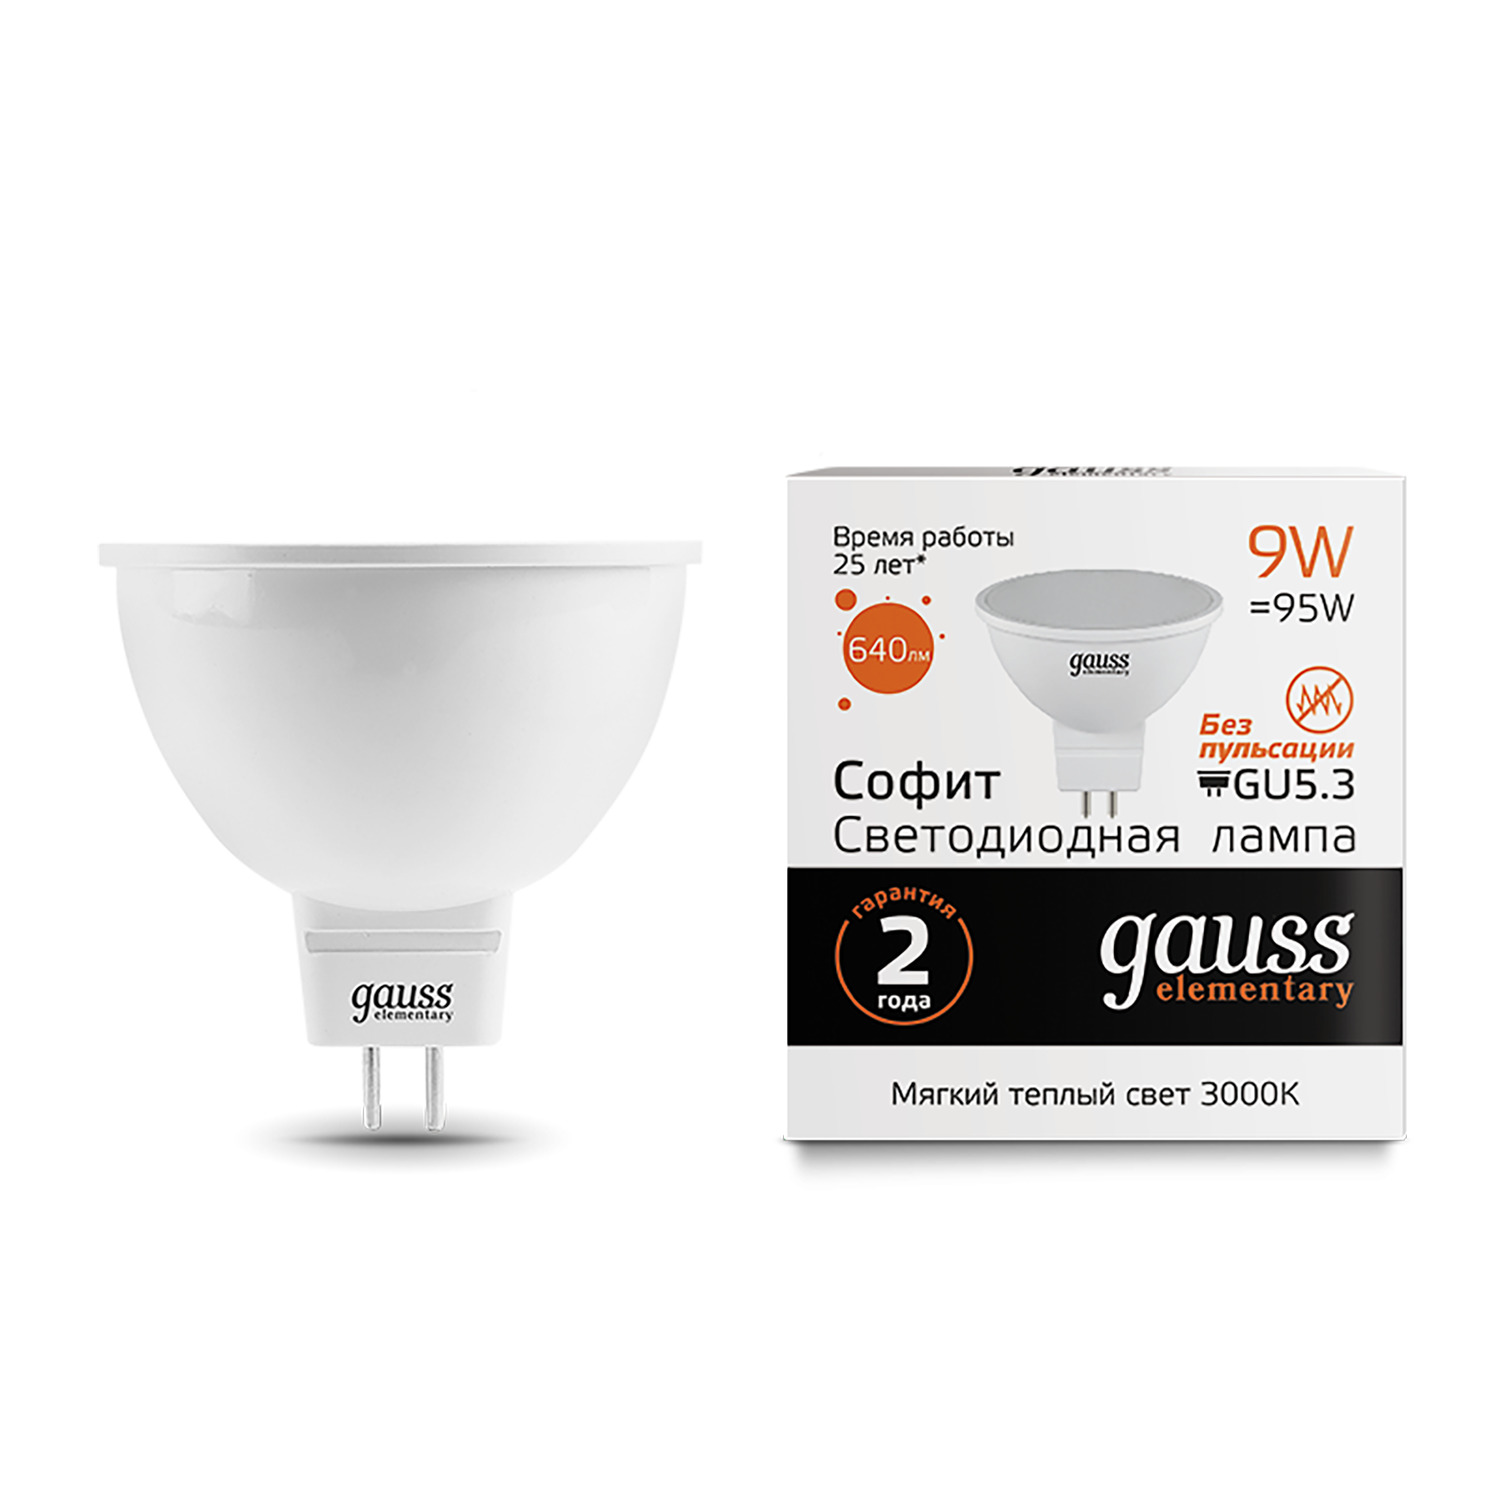 Упаковка ламп 10 штук Лампа Gauss Elementary MR16 9W 640lm 3000K GU5.3 LED купить в интернет-магазине, цены на Мегамаркет